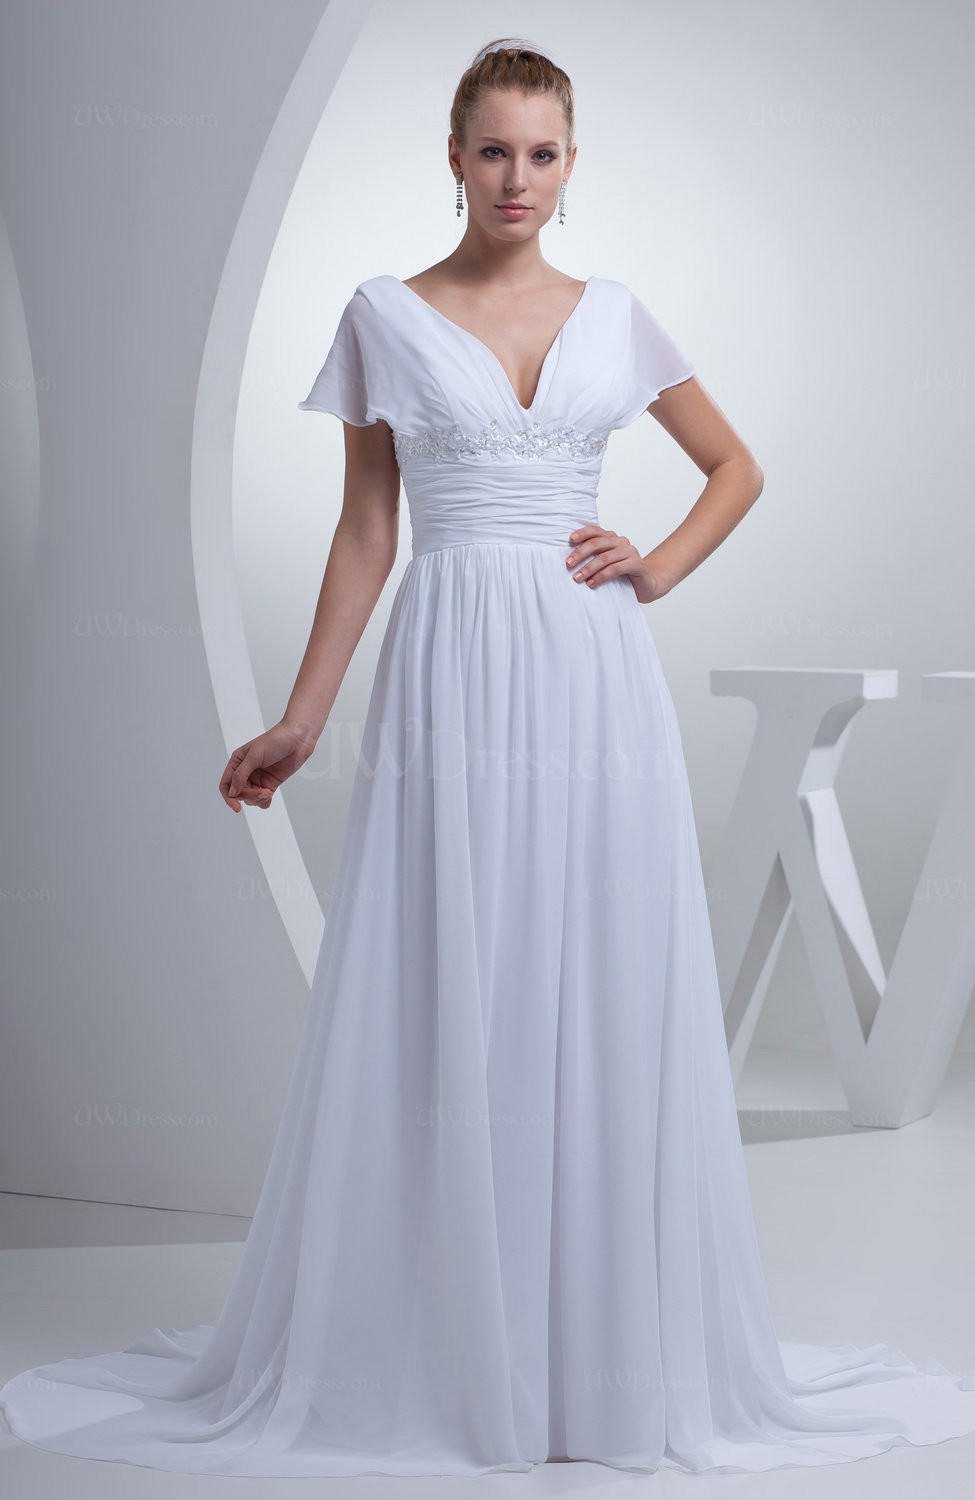 Short Sleeve Wedding Gown
 White Plain Hall A line V neck Short Sleeve Chiffon Court